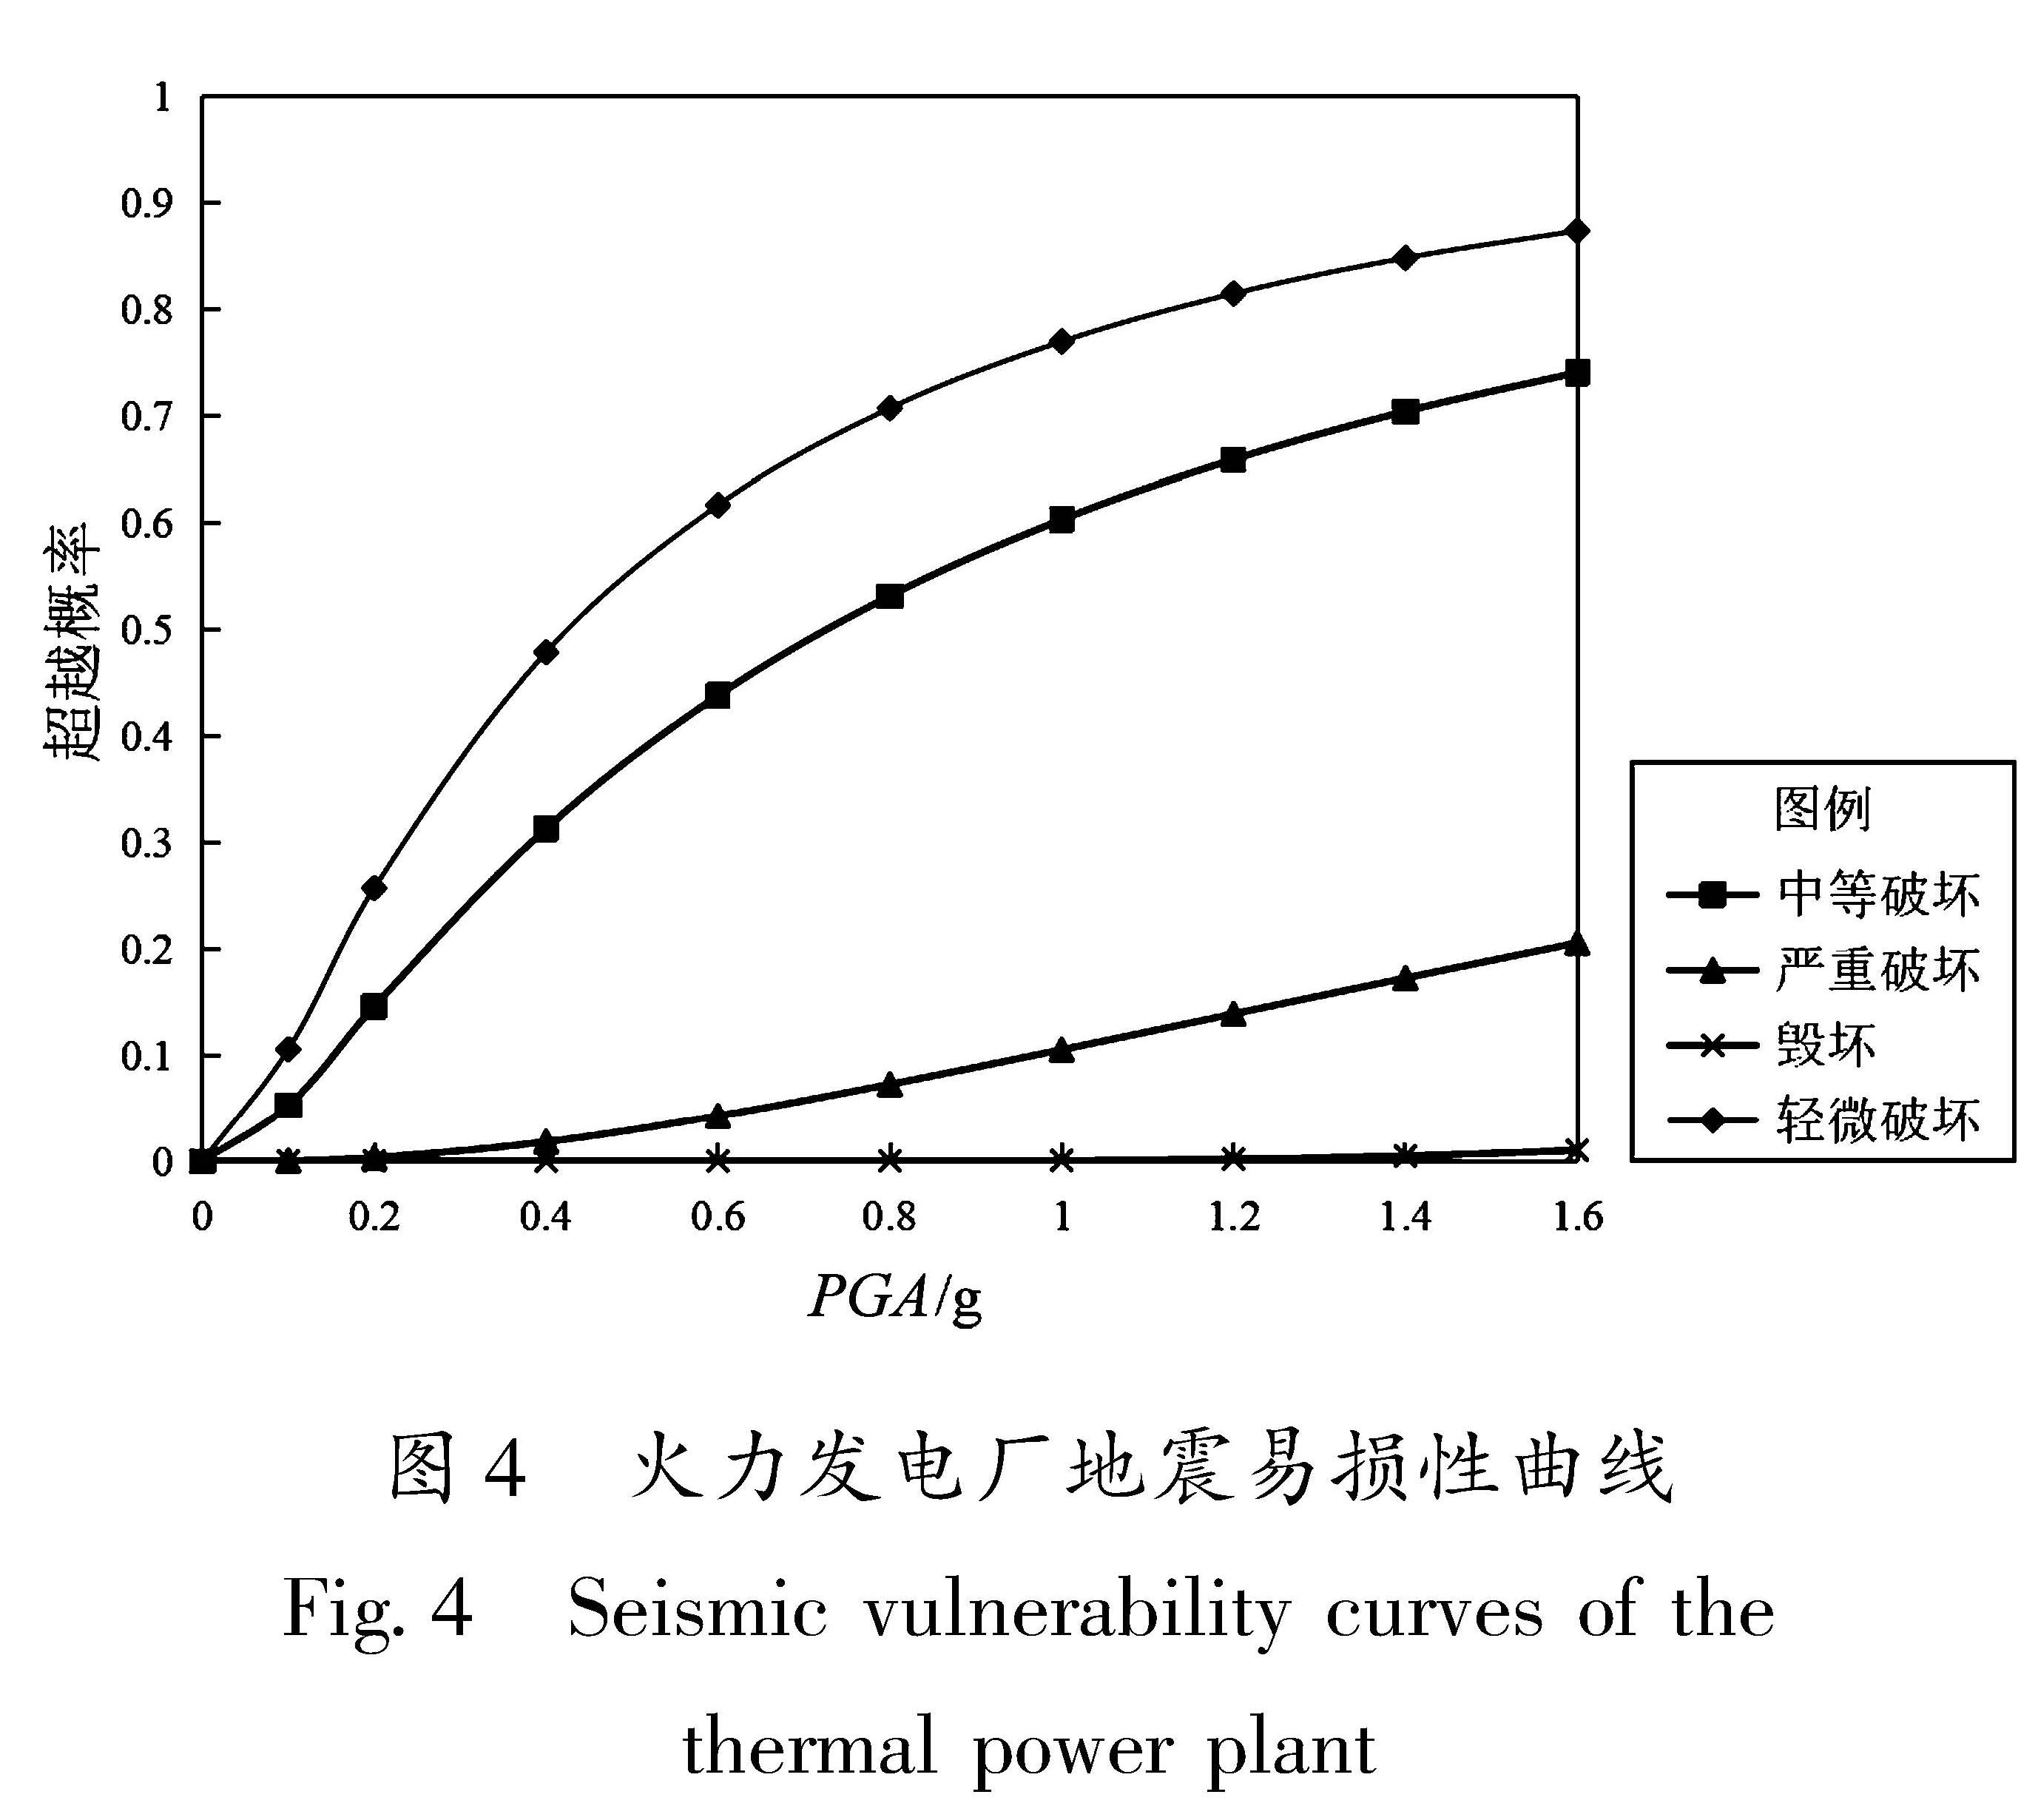 图4 火力发电厂地震易损性曲线<br/>Fig.4 Seismic vulnerability curves of the thermal power plant